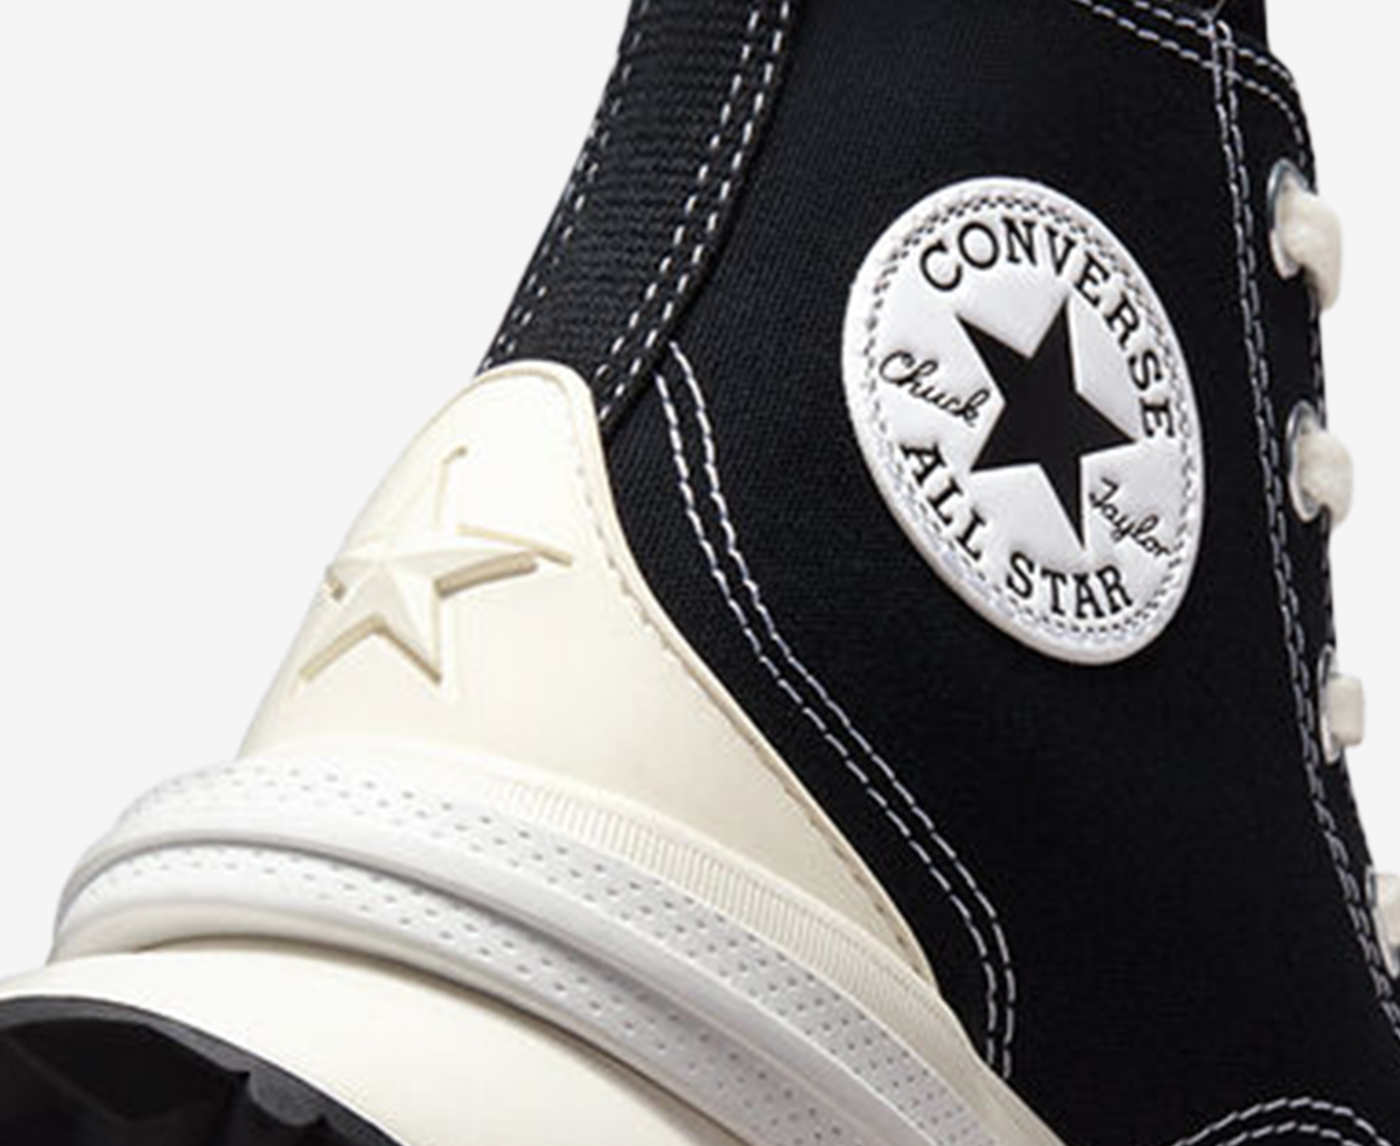 Converse Run Star Legacy CX platform sneakers in mocha